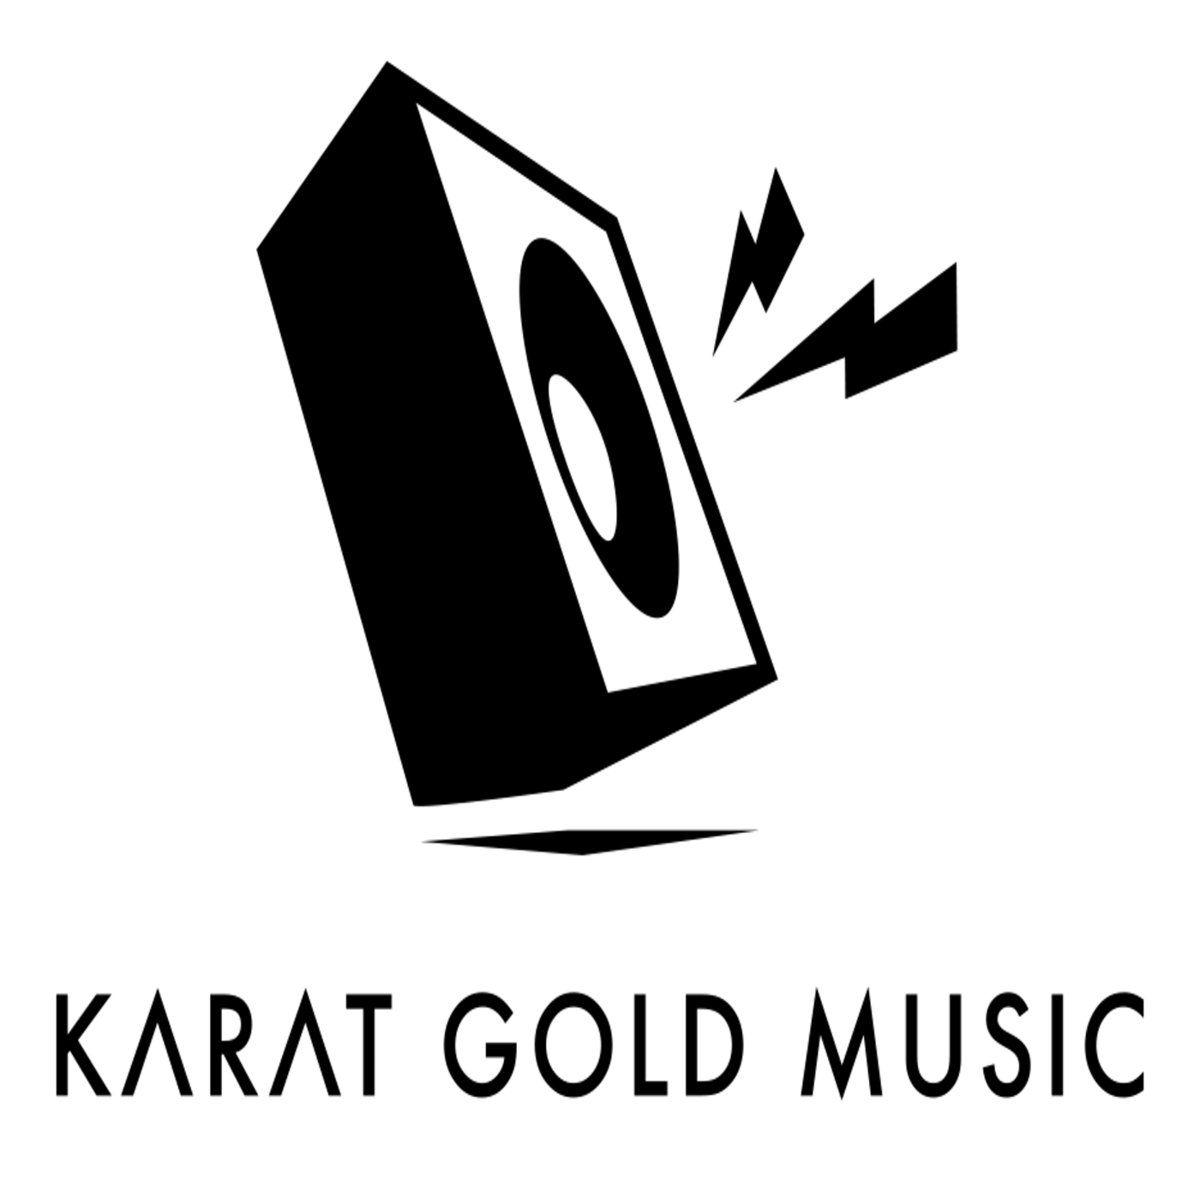 Gold Black Beats Logo - Years Of Beats [1996 2016]KT II Karat Gold Music